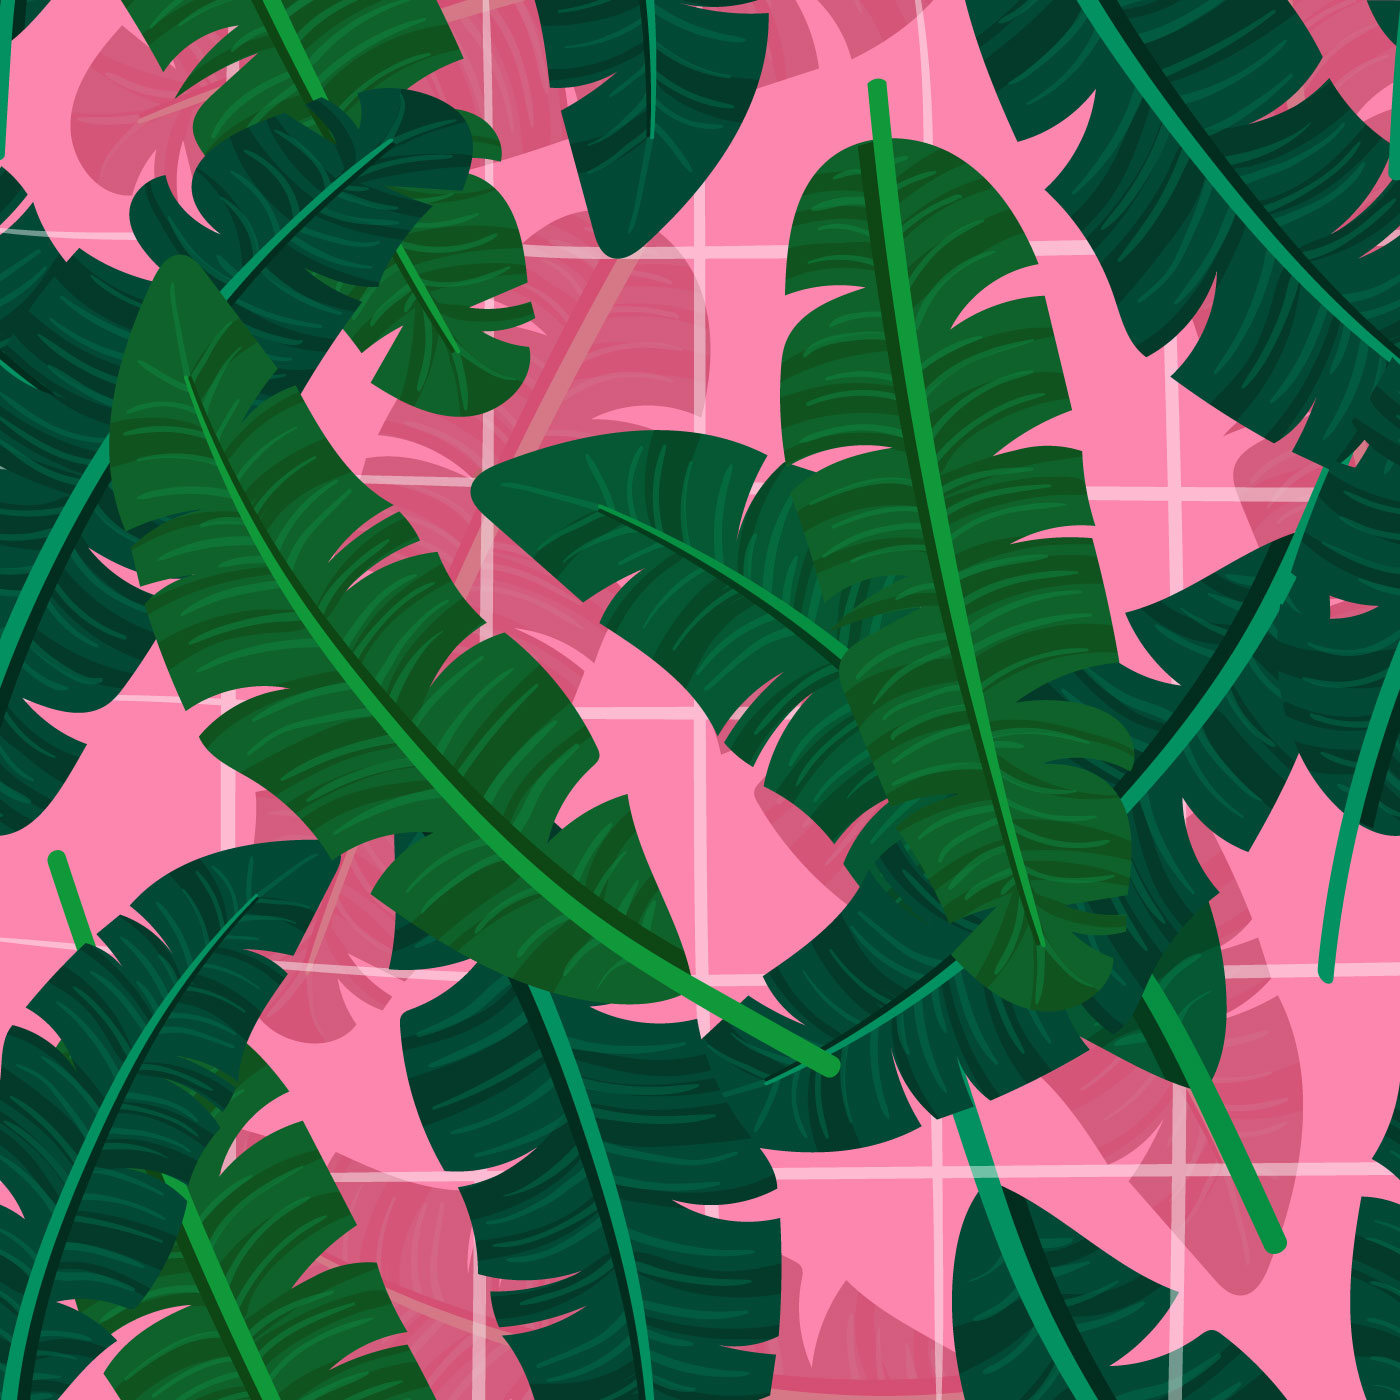  Banana  Leaf  On A Pink Background  Download Free Vectors 